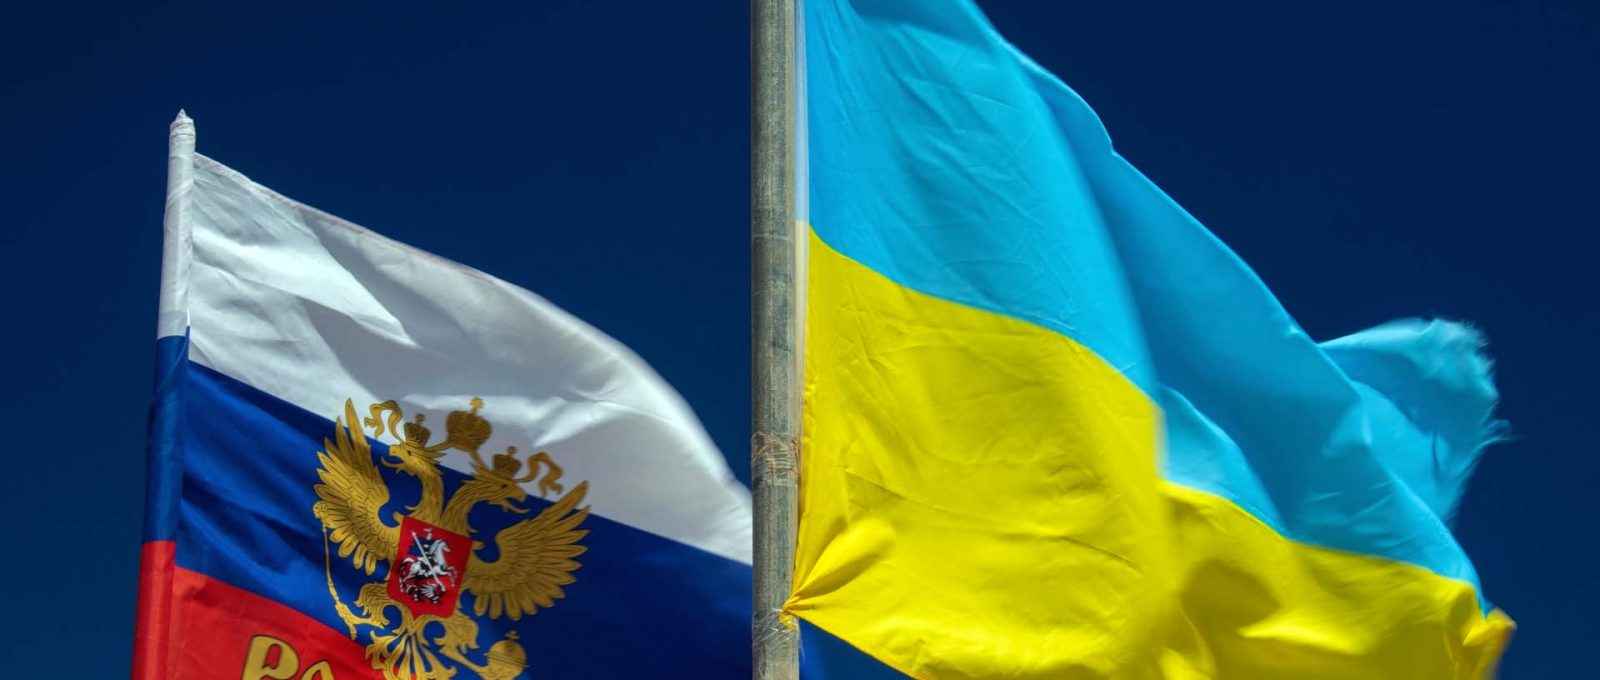 Bandeiras da Rússia e Ucrânia (Public Domain Pictures).